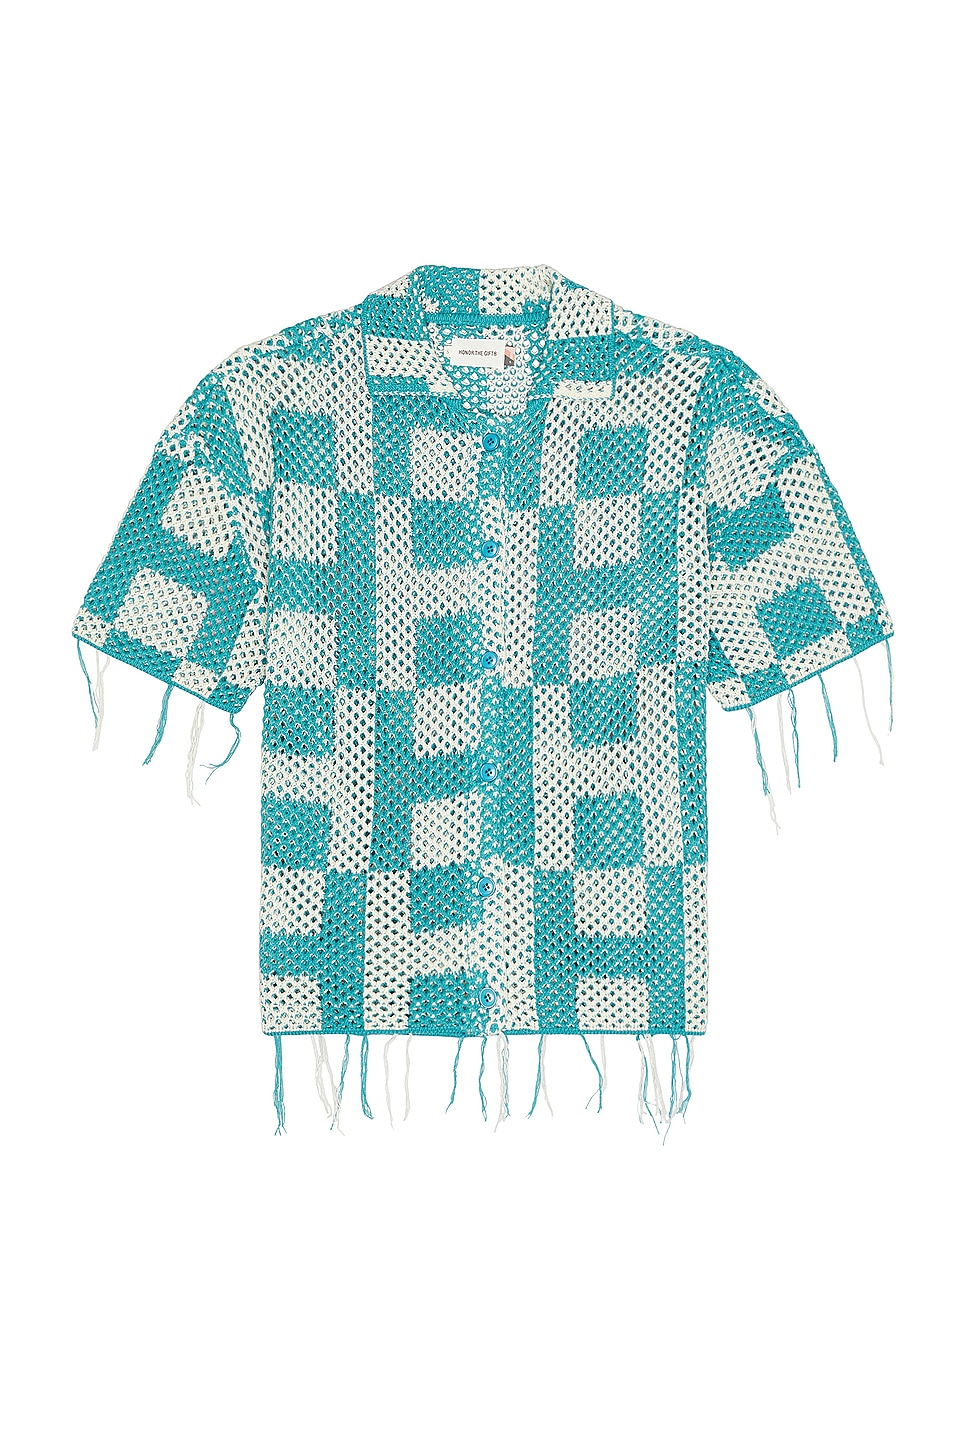 A-spring Unisex Crochet Button Down Shirt in Blue